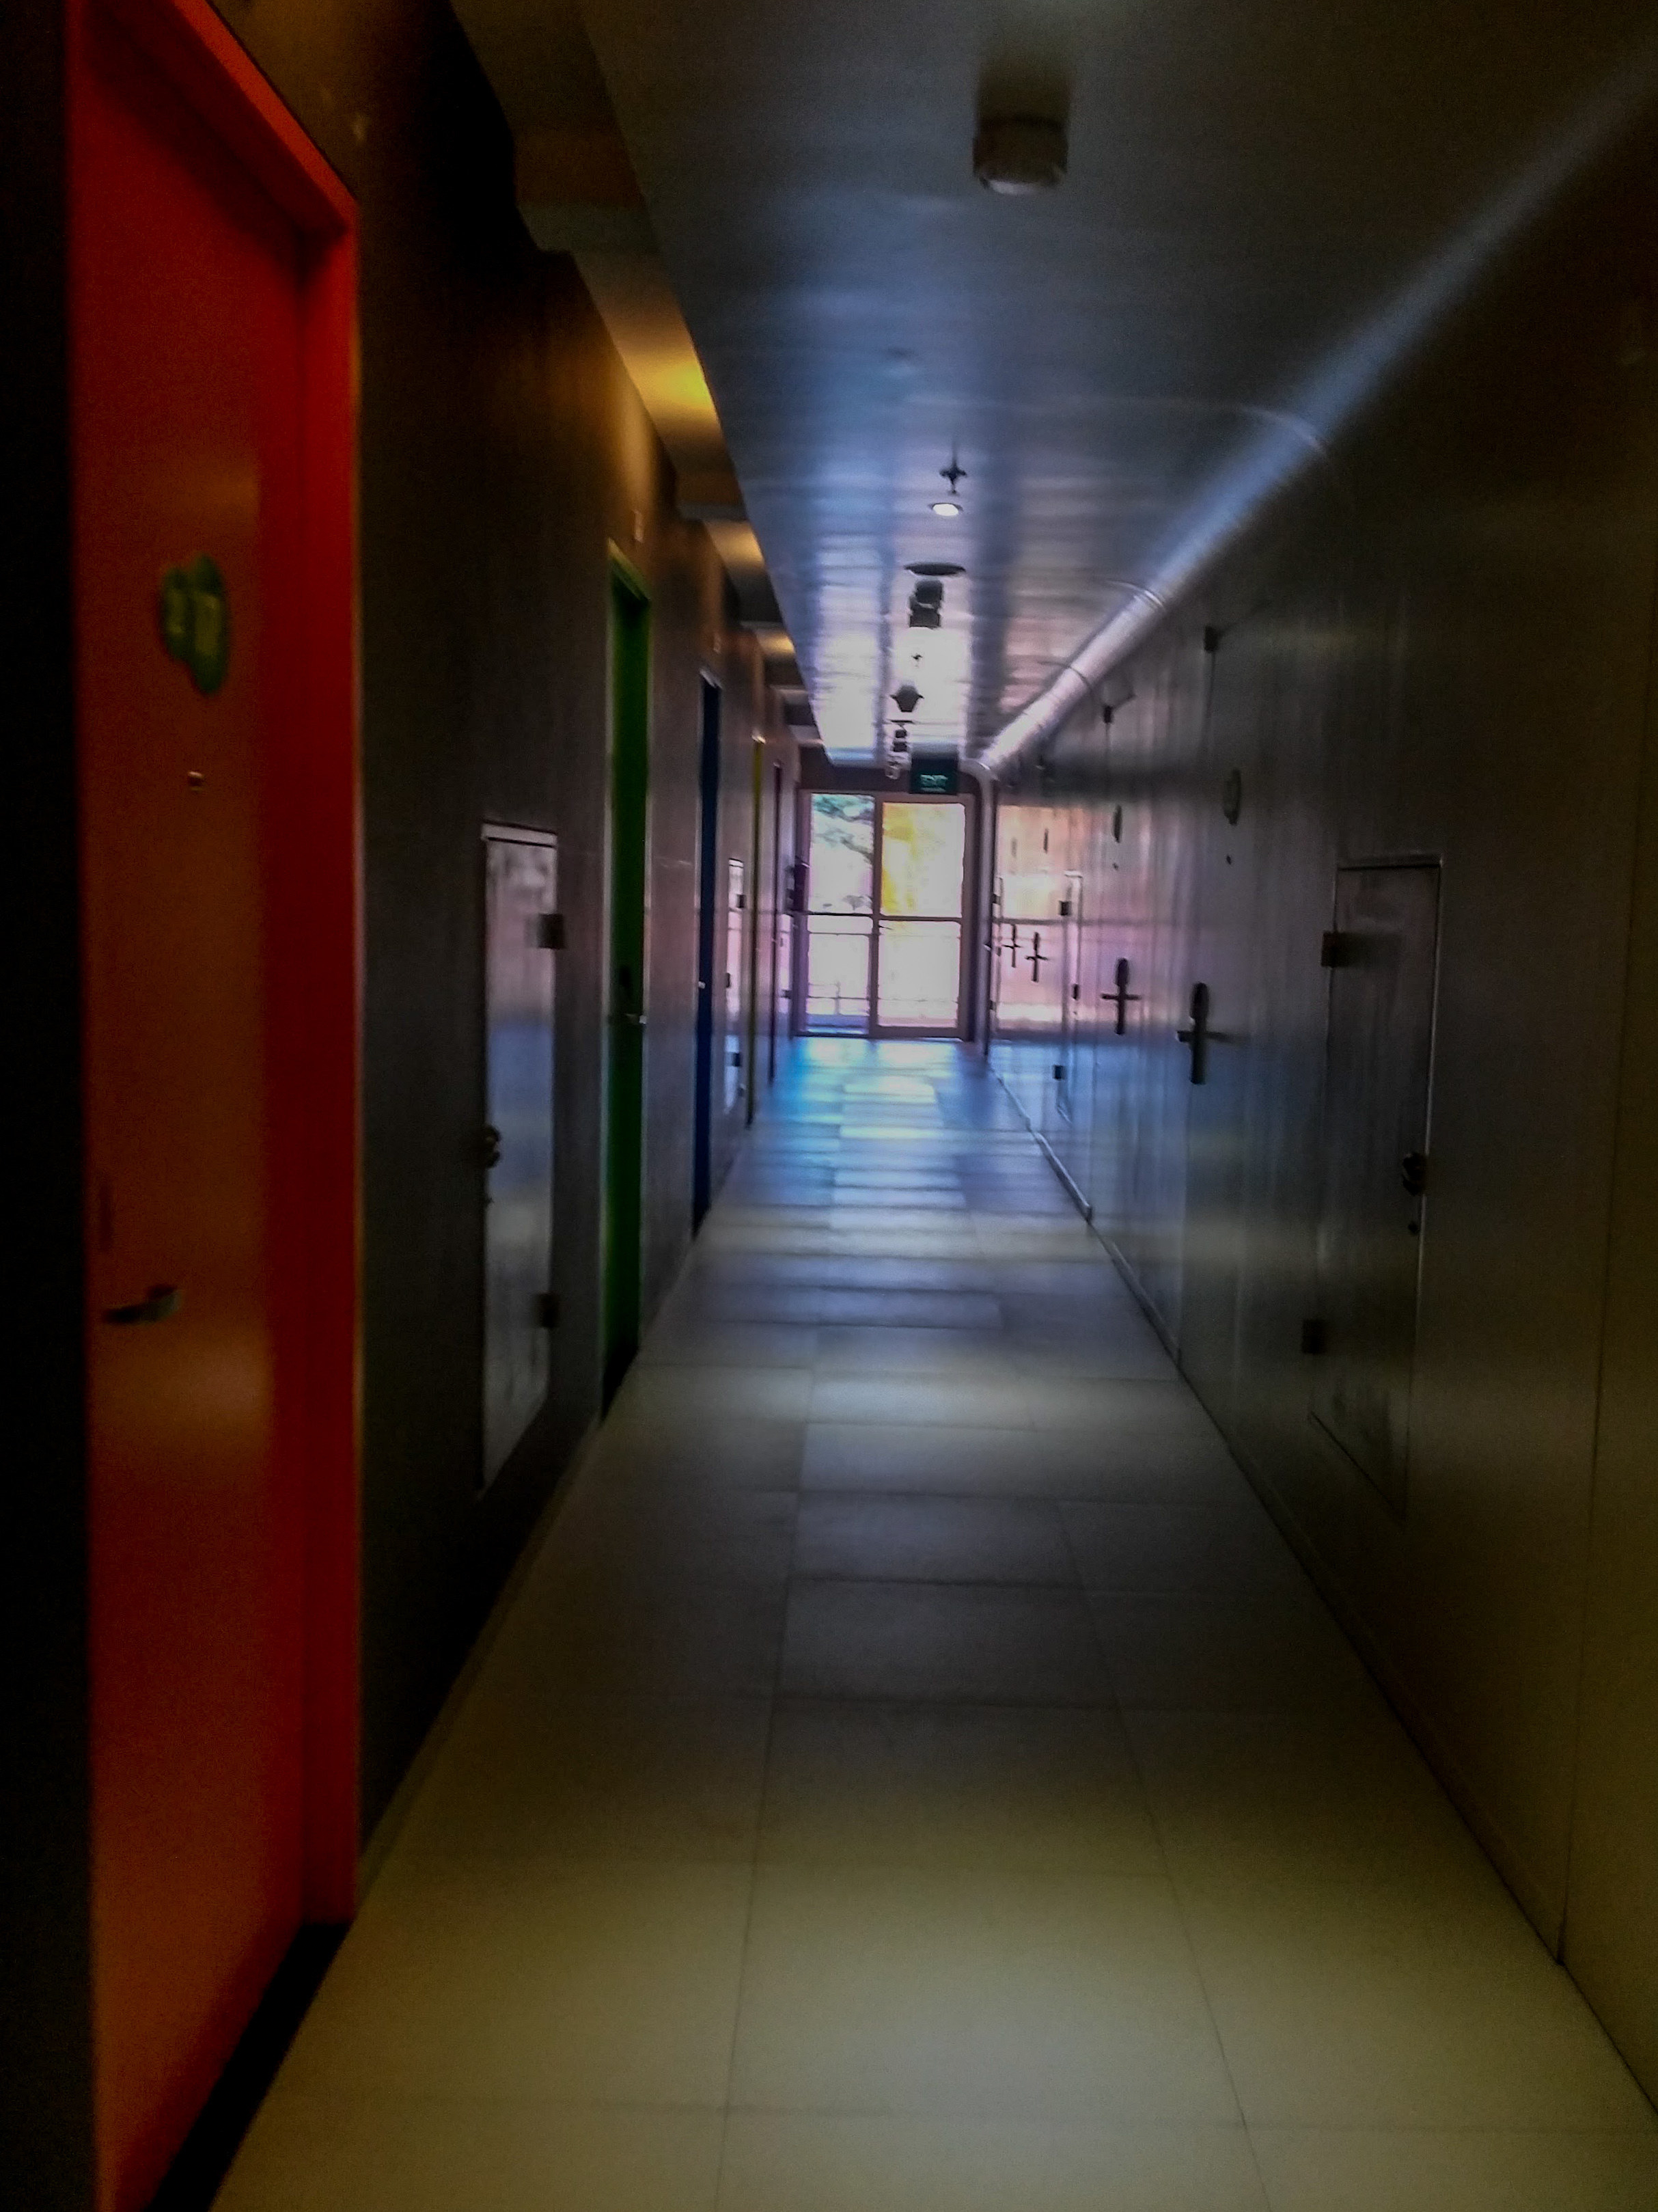 A college dorm hallway